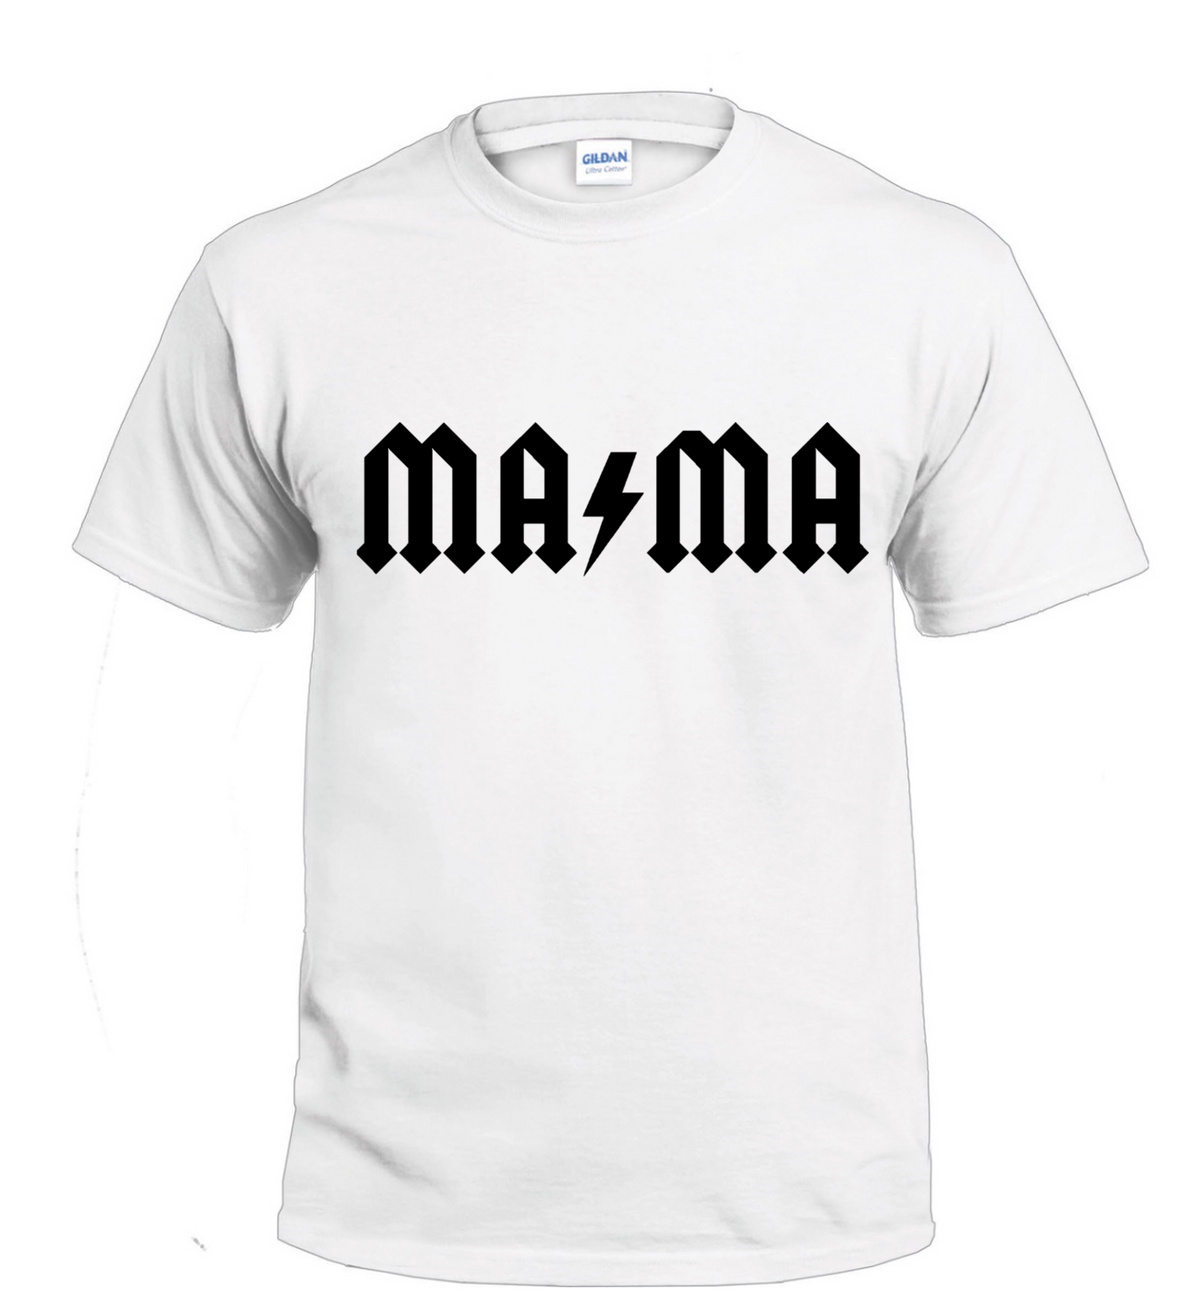 Mama shirt 1